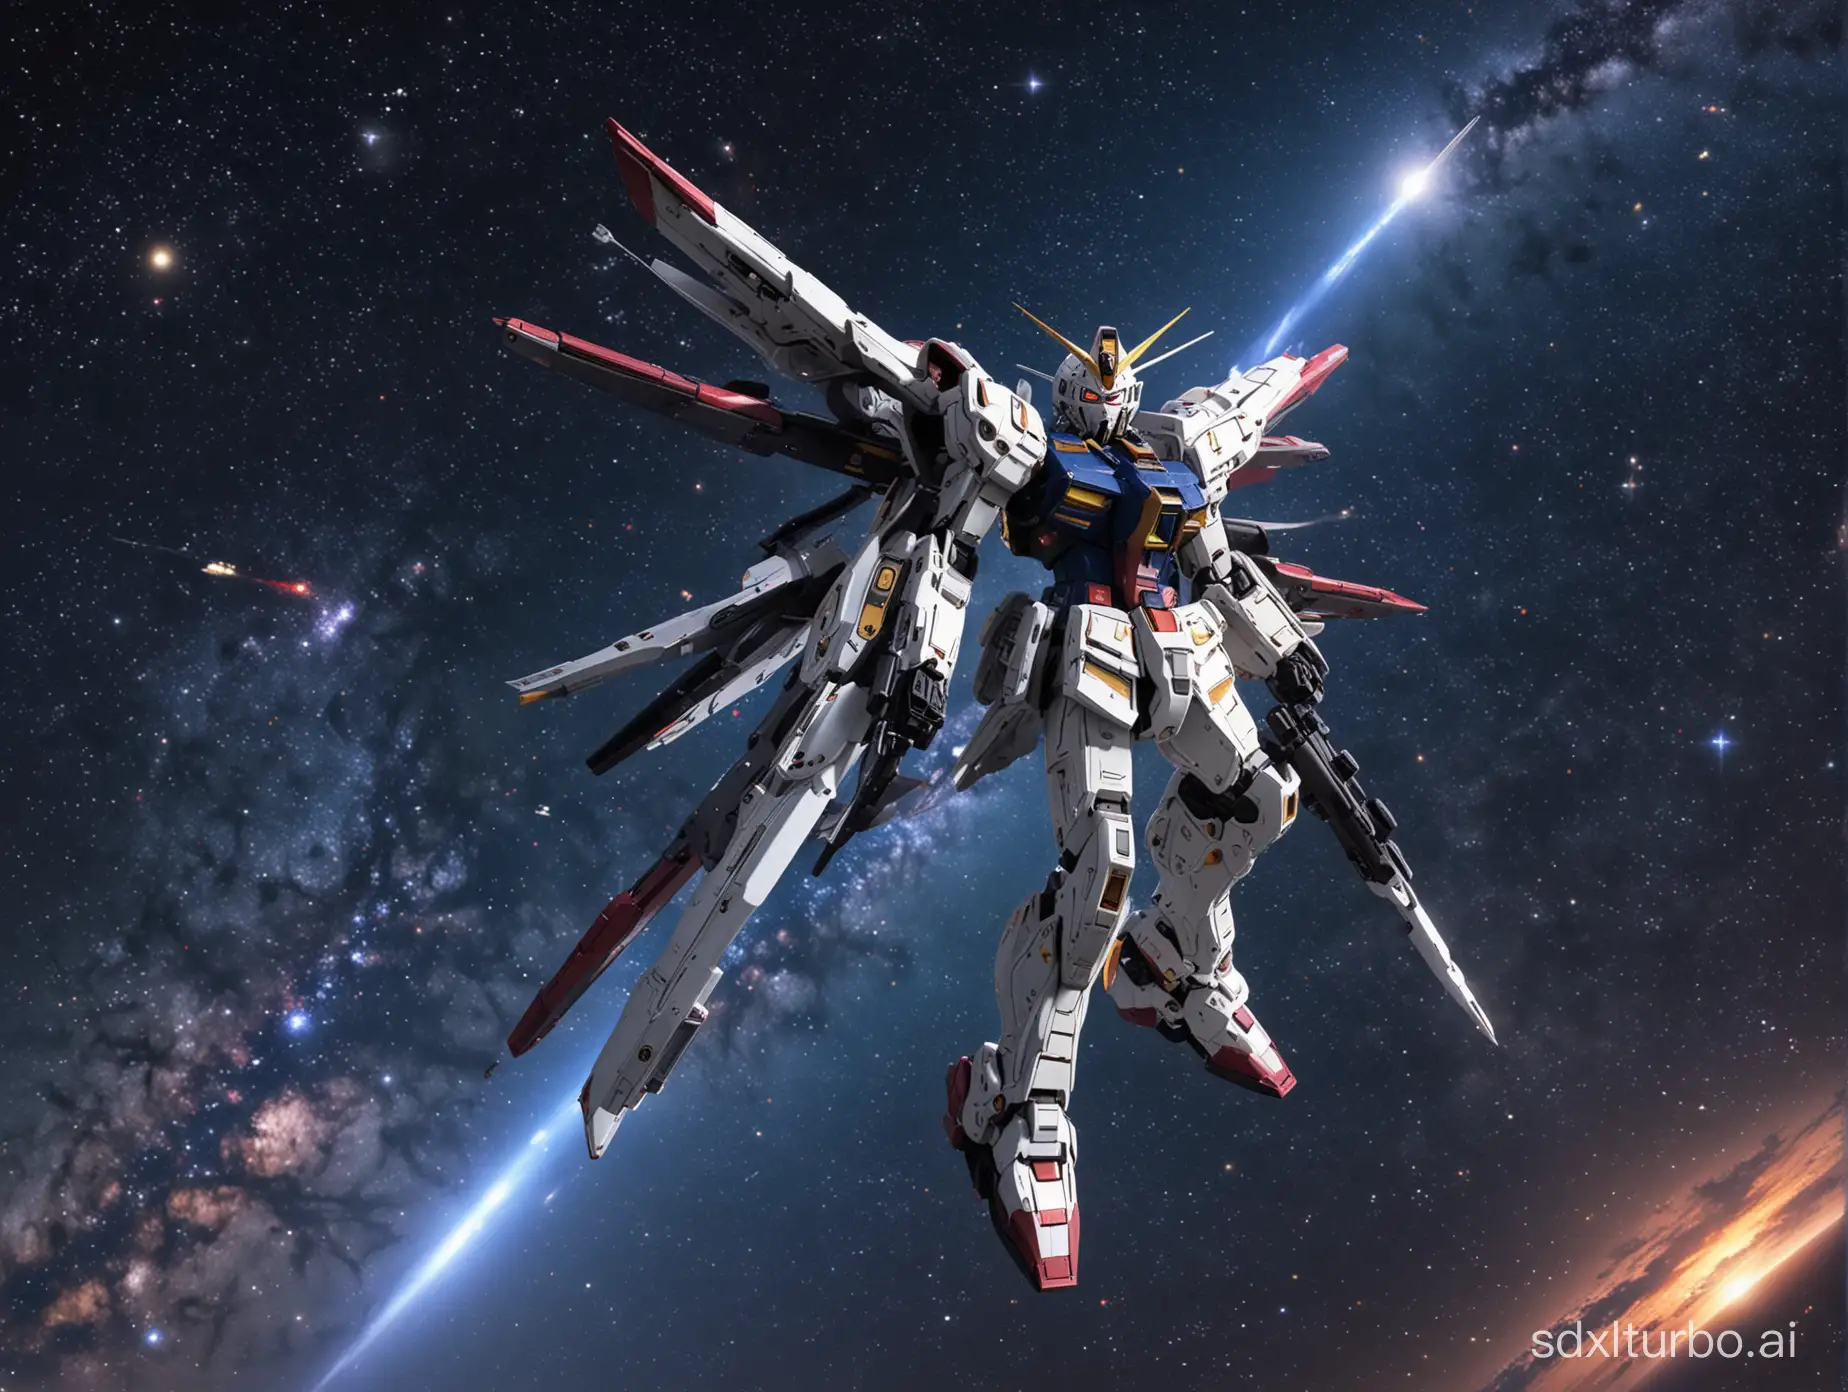 Gundam-ZZ-Soaring-through-Hyper-Galaxy-under-Starry-Sky